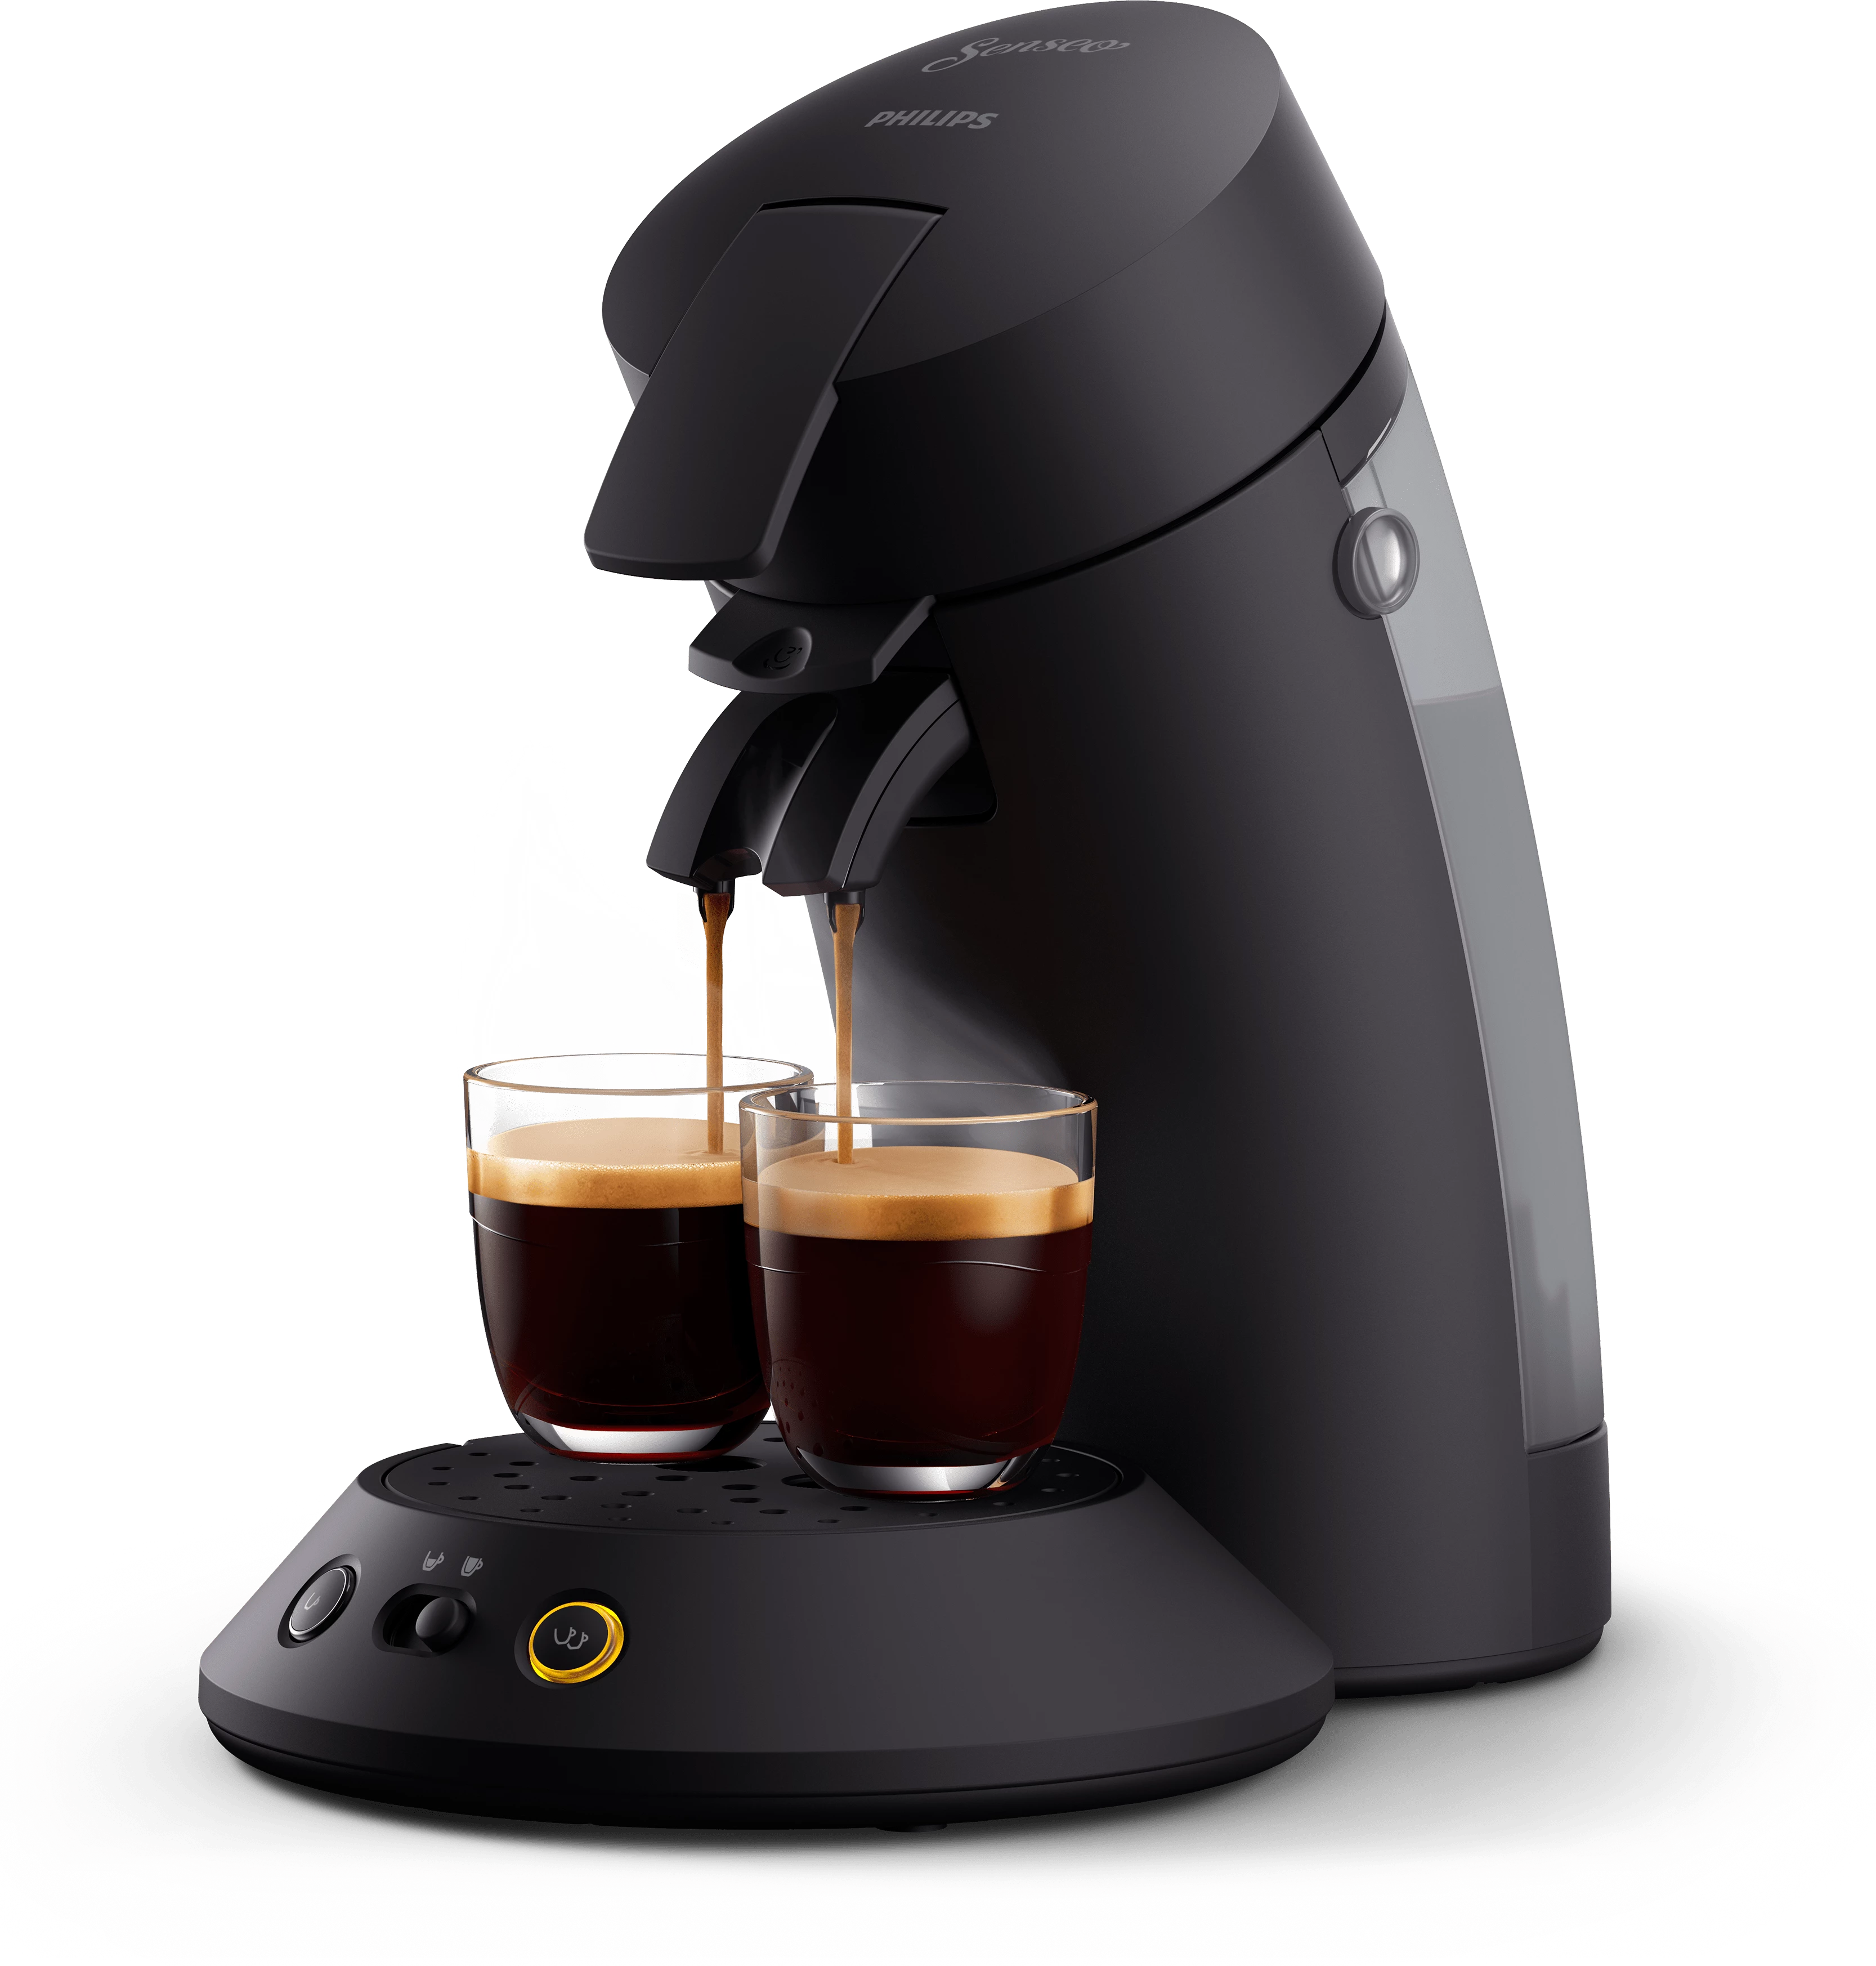 Machine a café dosette SENSEO ORIGINAL+ Philips CSA210/23, Booster